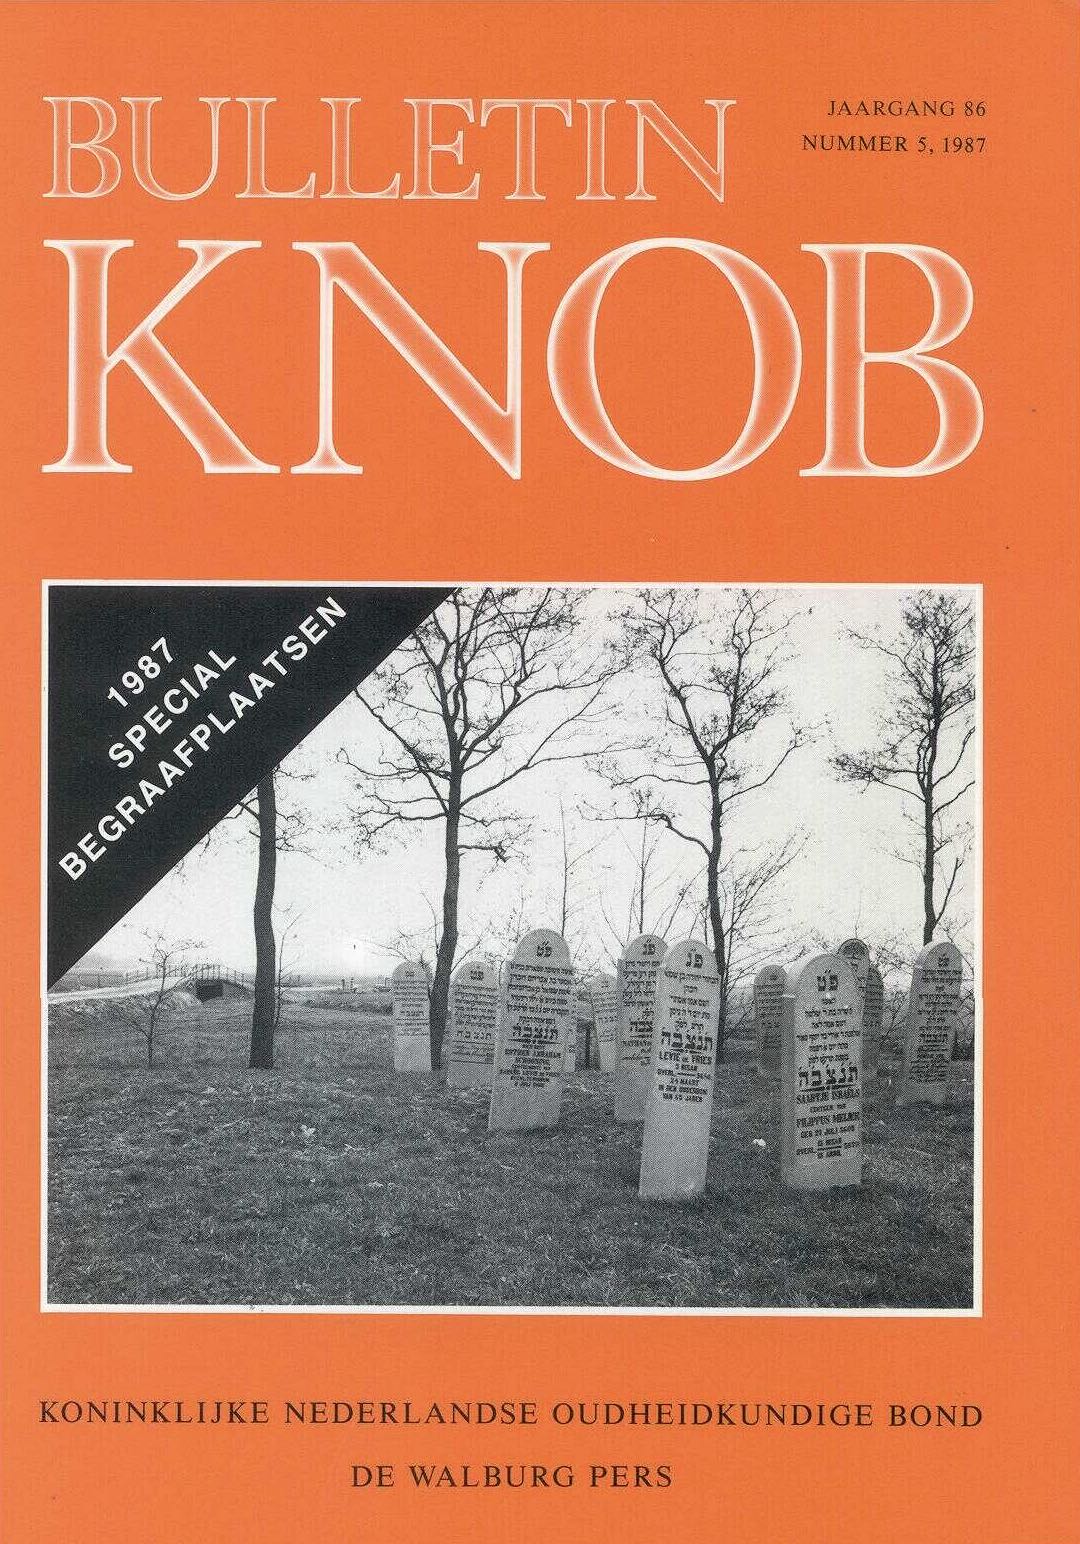 						Toon Bulletin KNOB 86 (1987) 5
					